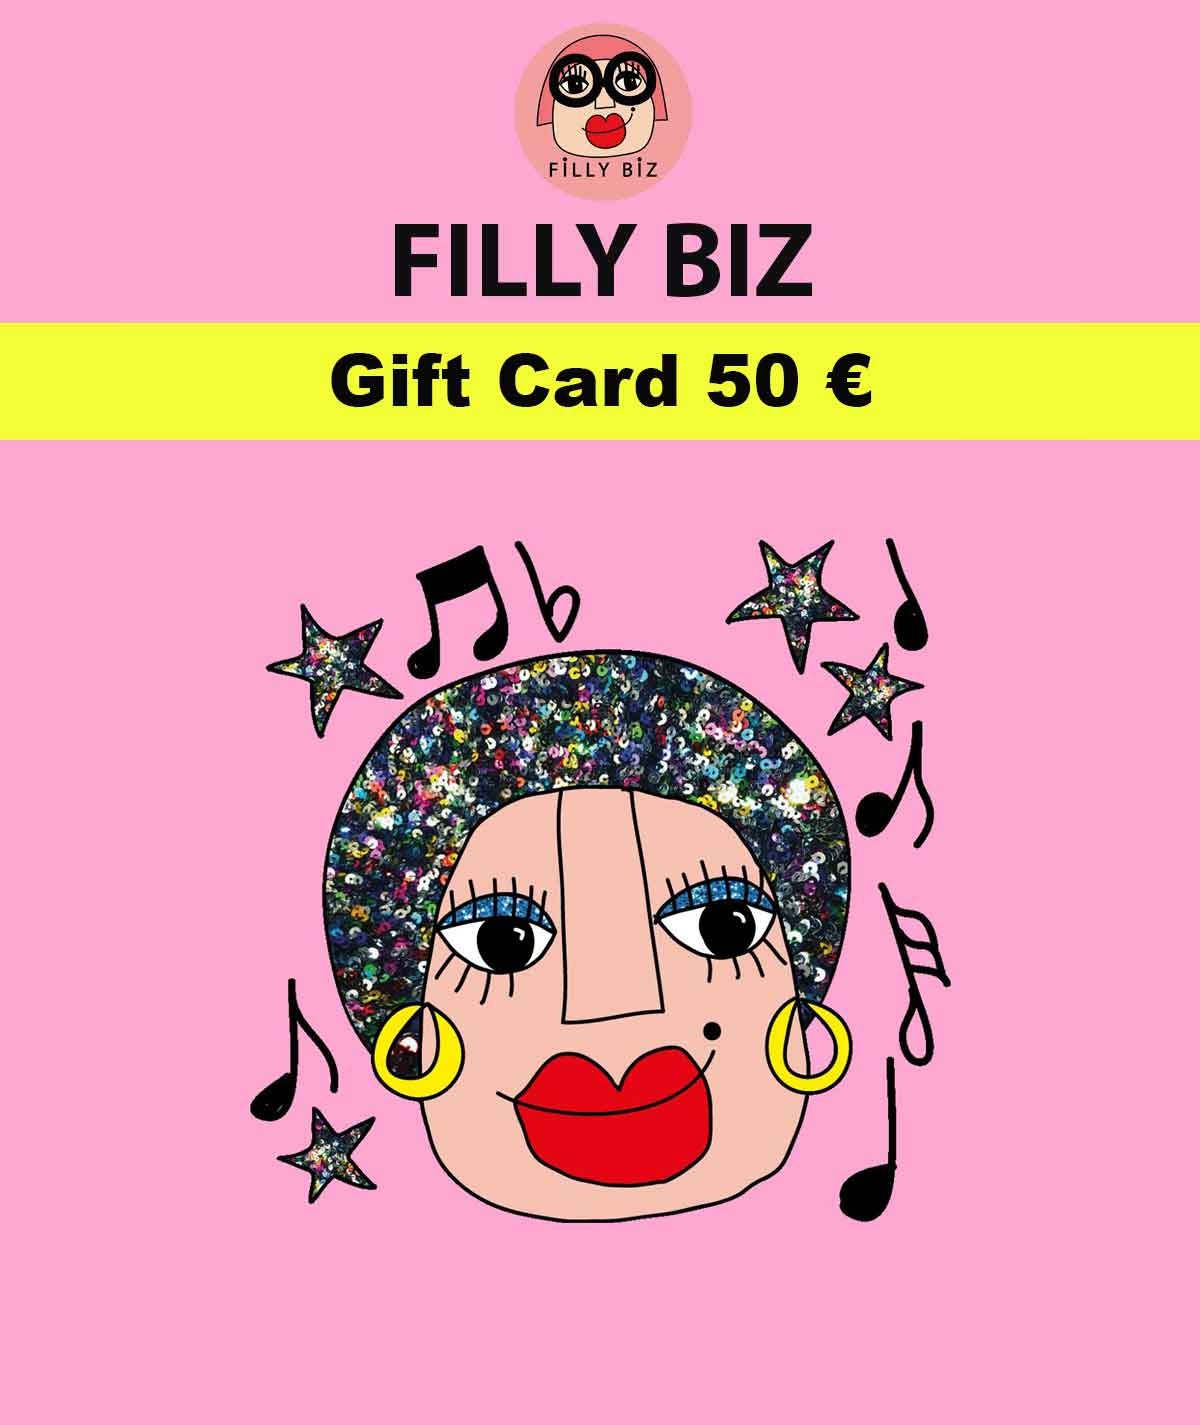 Filly Biz Gift Card 50 €